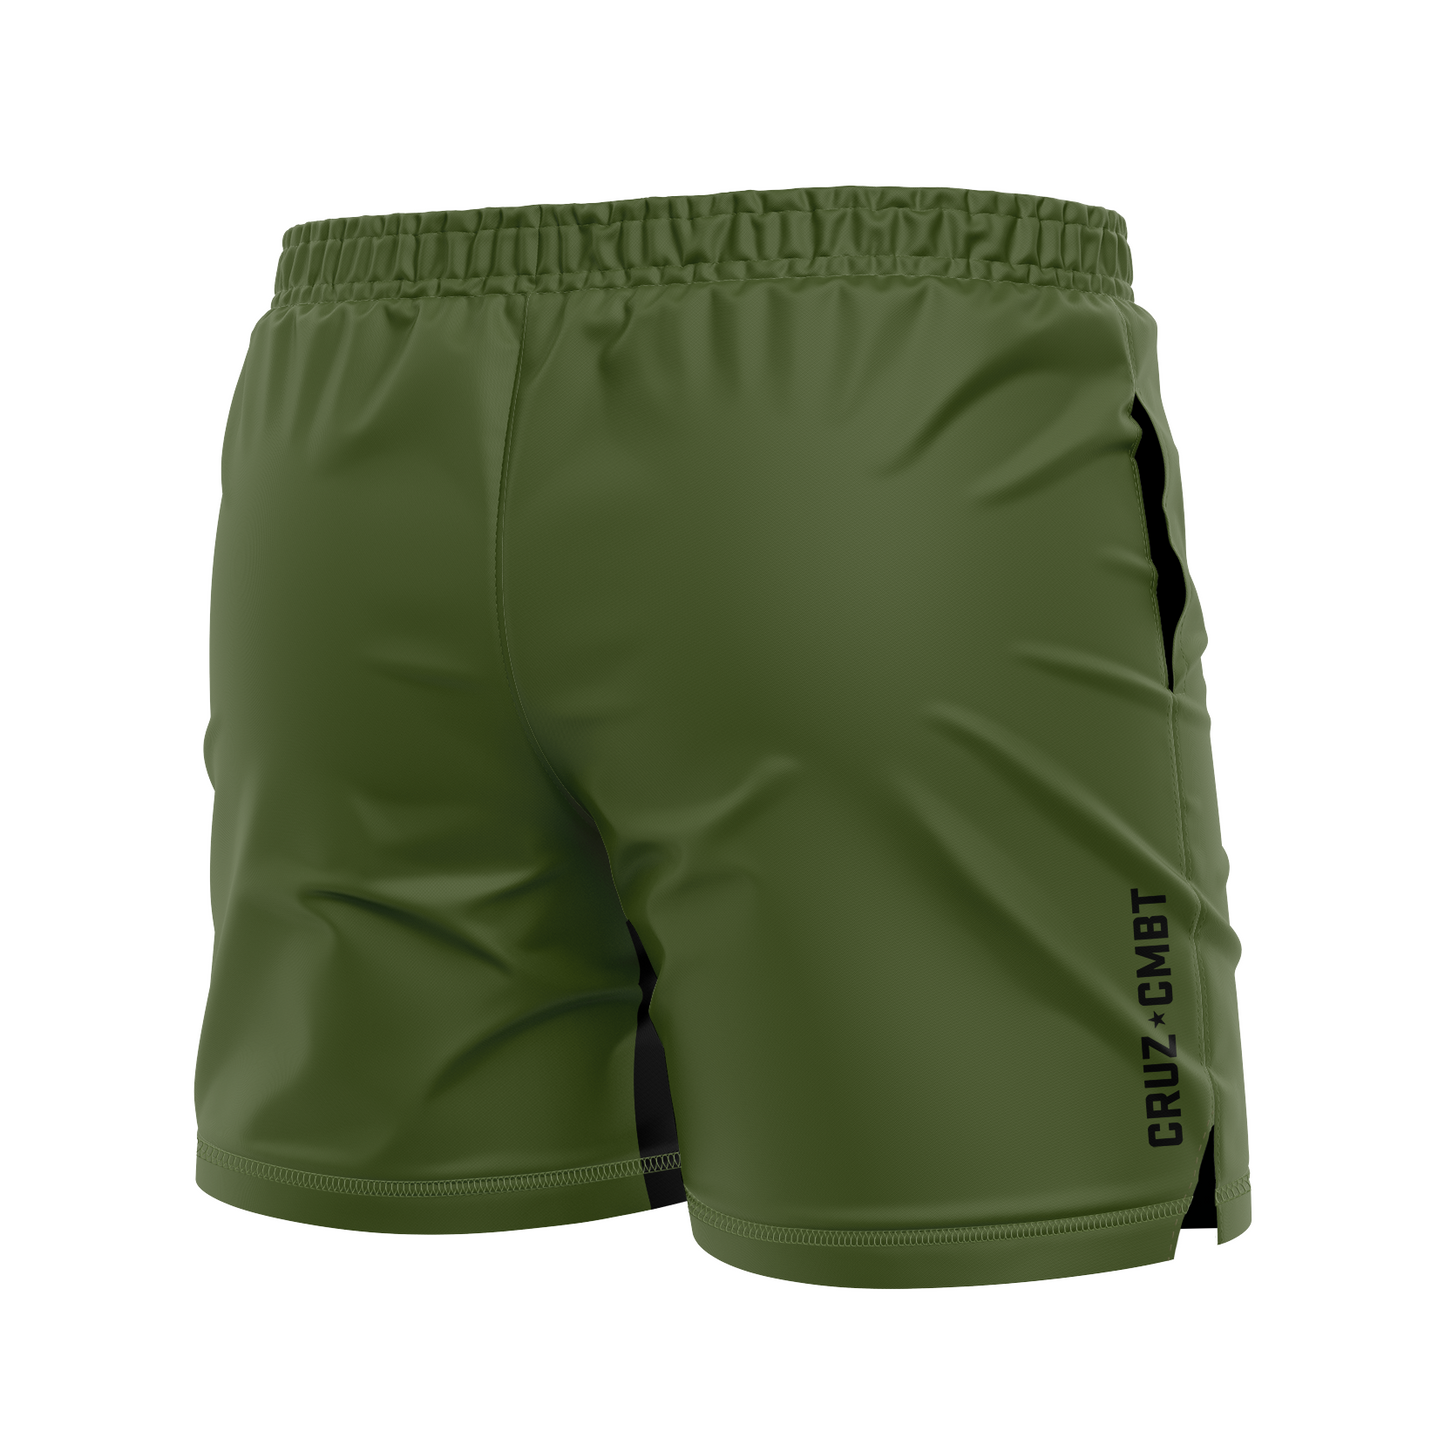 Base Collection men's training shorts, o.d. green